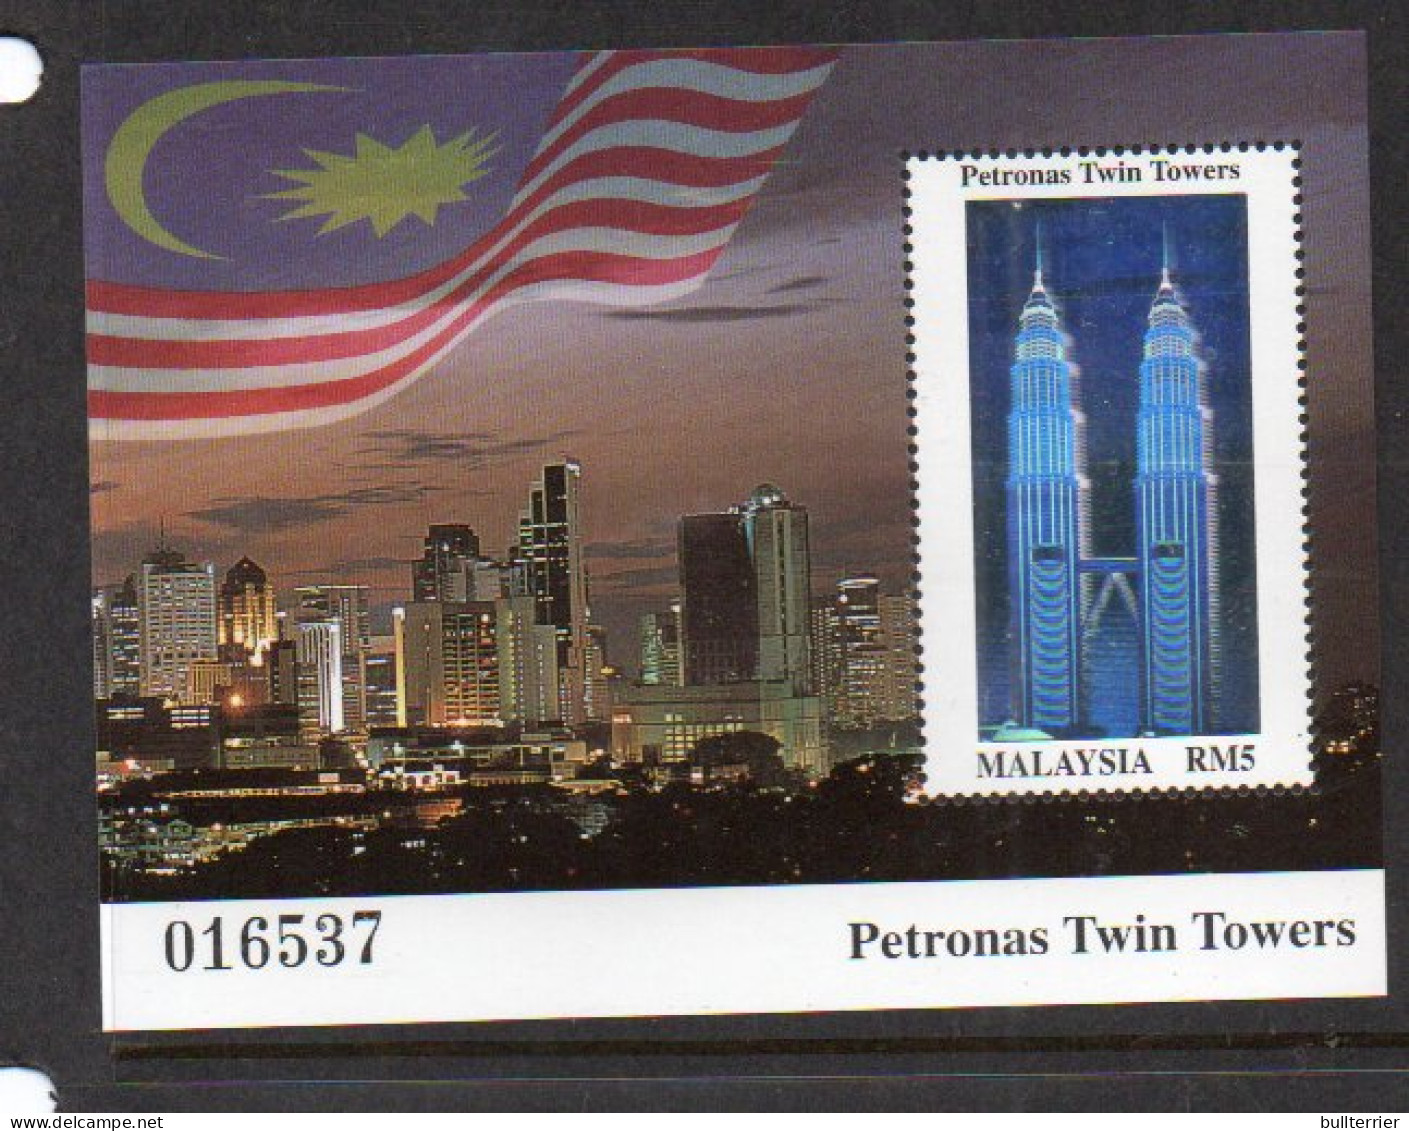 HOLOGRAMS - MALAYSIA - 1999 - PETRONAS TOWER  HOLOGRAM  SOUVENIR SHEET  MINT NEVER HINGED  - Holograms